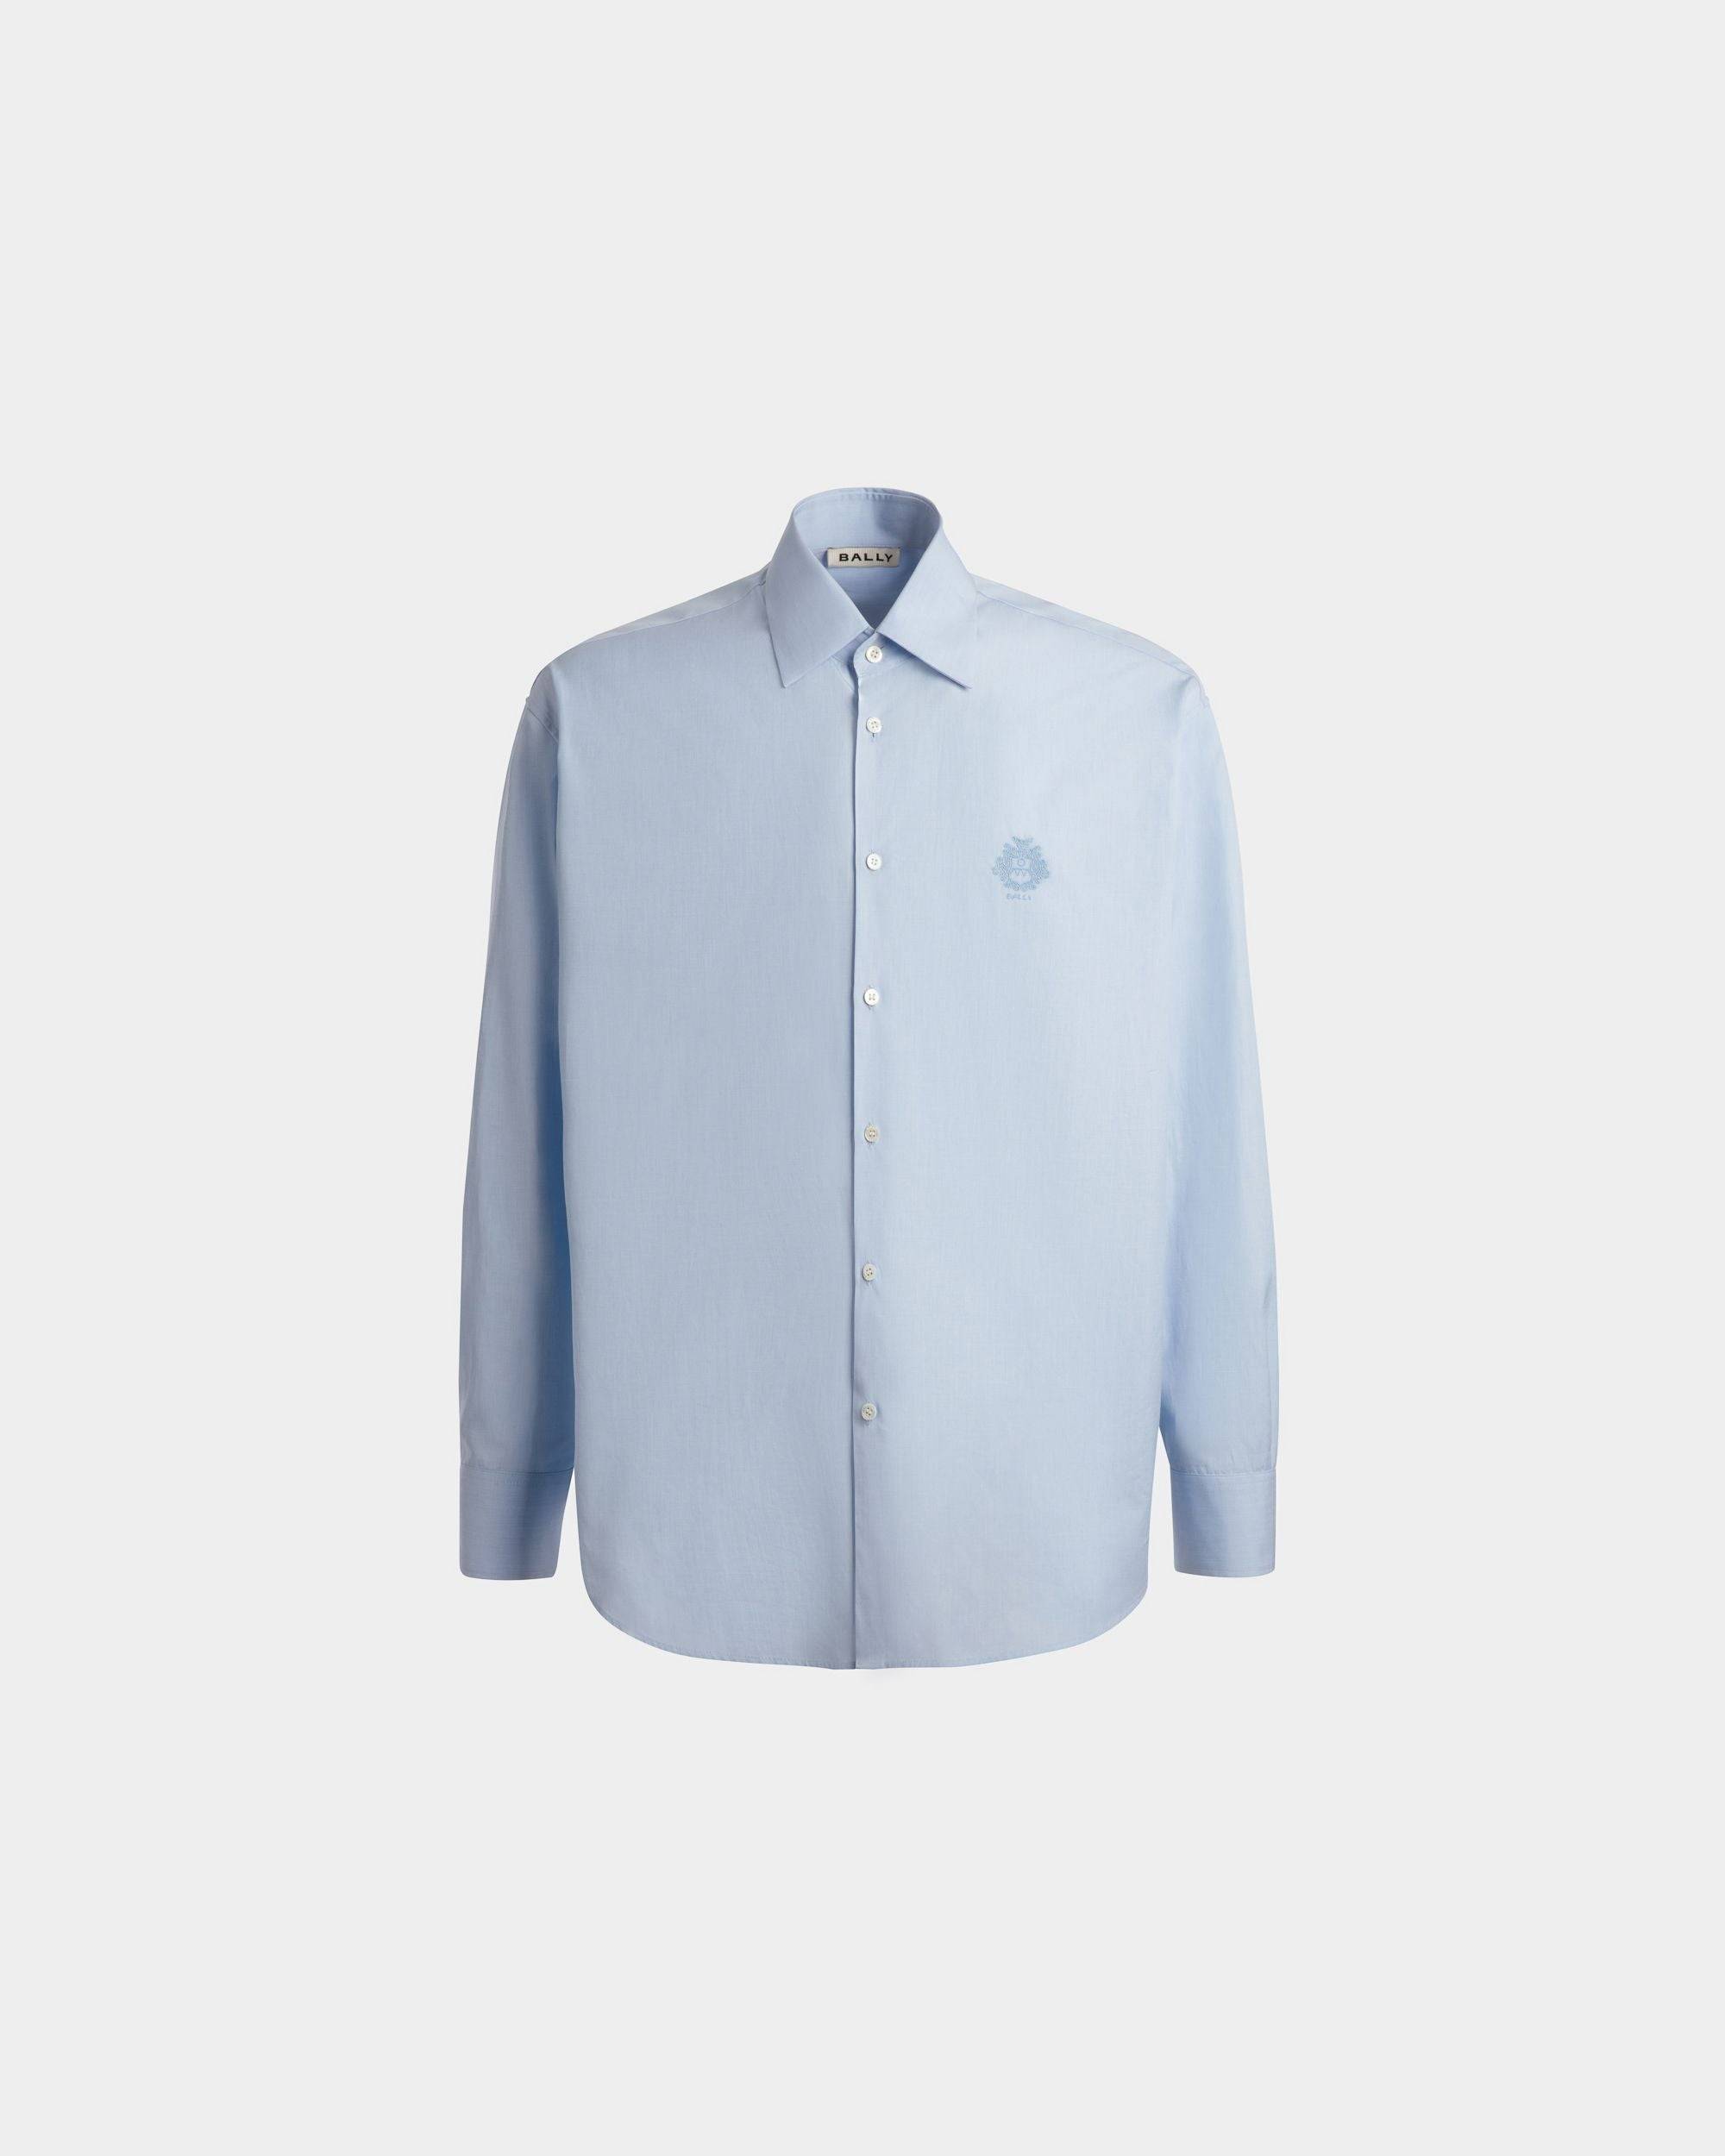 Men's Shirt in Light Blue Cotton | Bally | Still Life Front